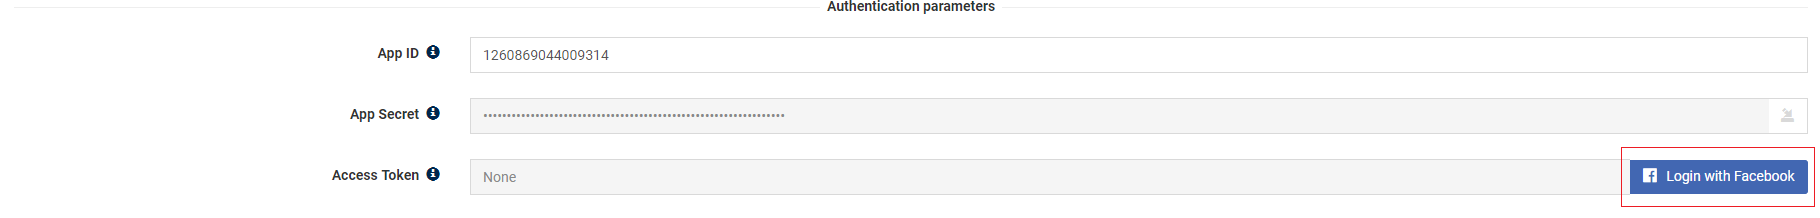 facebook-authentication-parameters.png